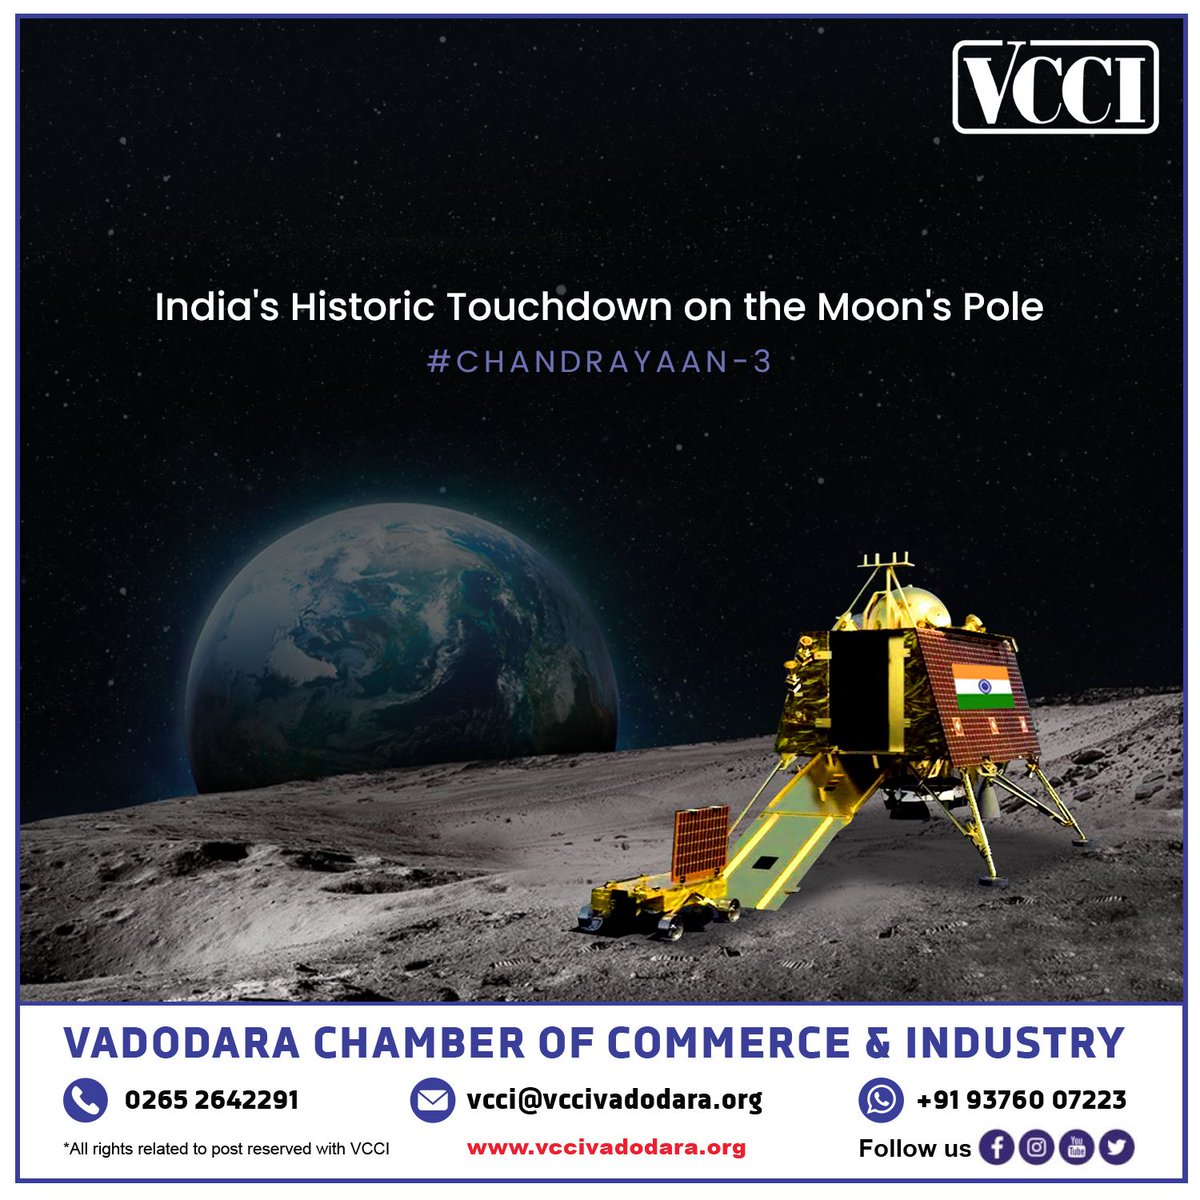 A moment of pride as Vikram touches the moon's pole, expanding India's cosmic footprint.   

#vcci #Chandrayaan3 #VikramLander #moon #ISRO #chandrayaan3 #chandrayaan3launch #vikramlander #missionmoon #LunarExploration #SpaceVoyage #isro #ExploringOuterSpace #ISROAchievements